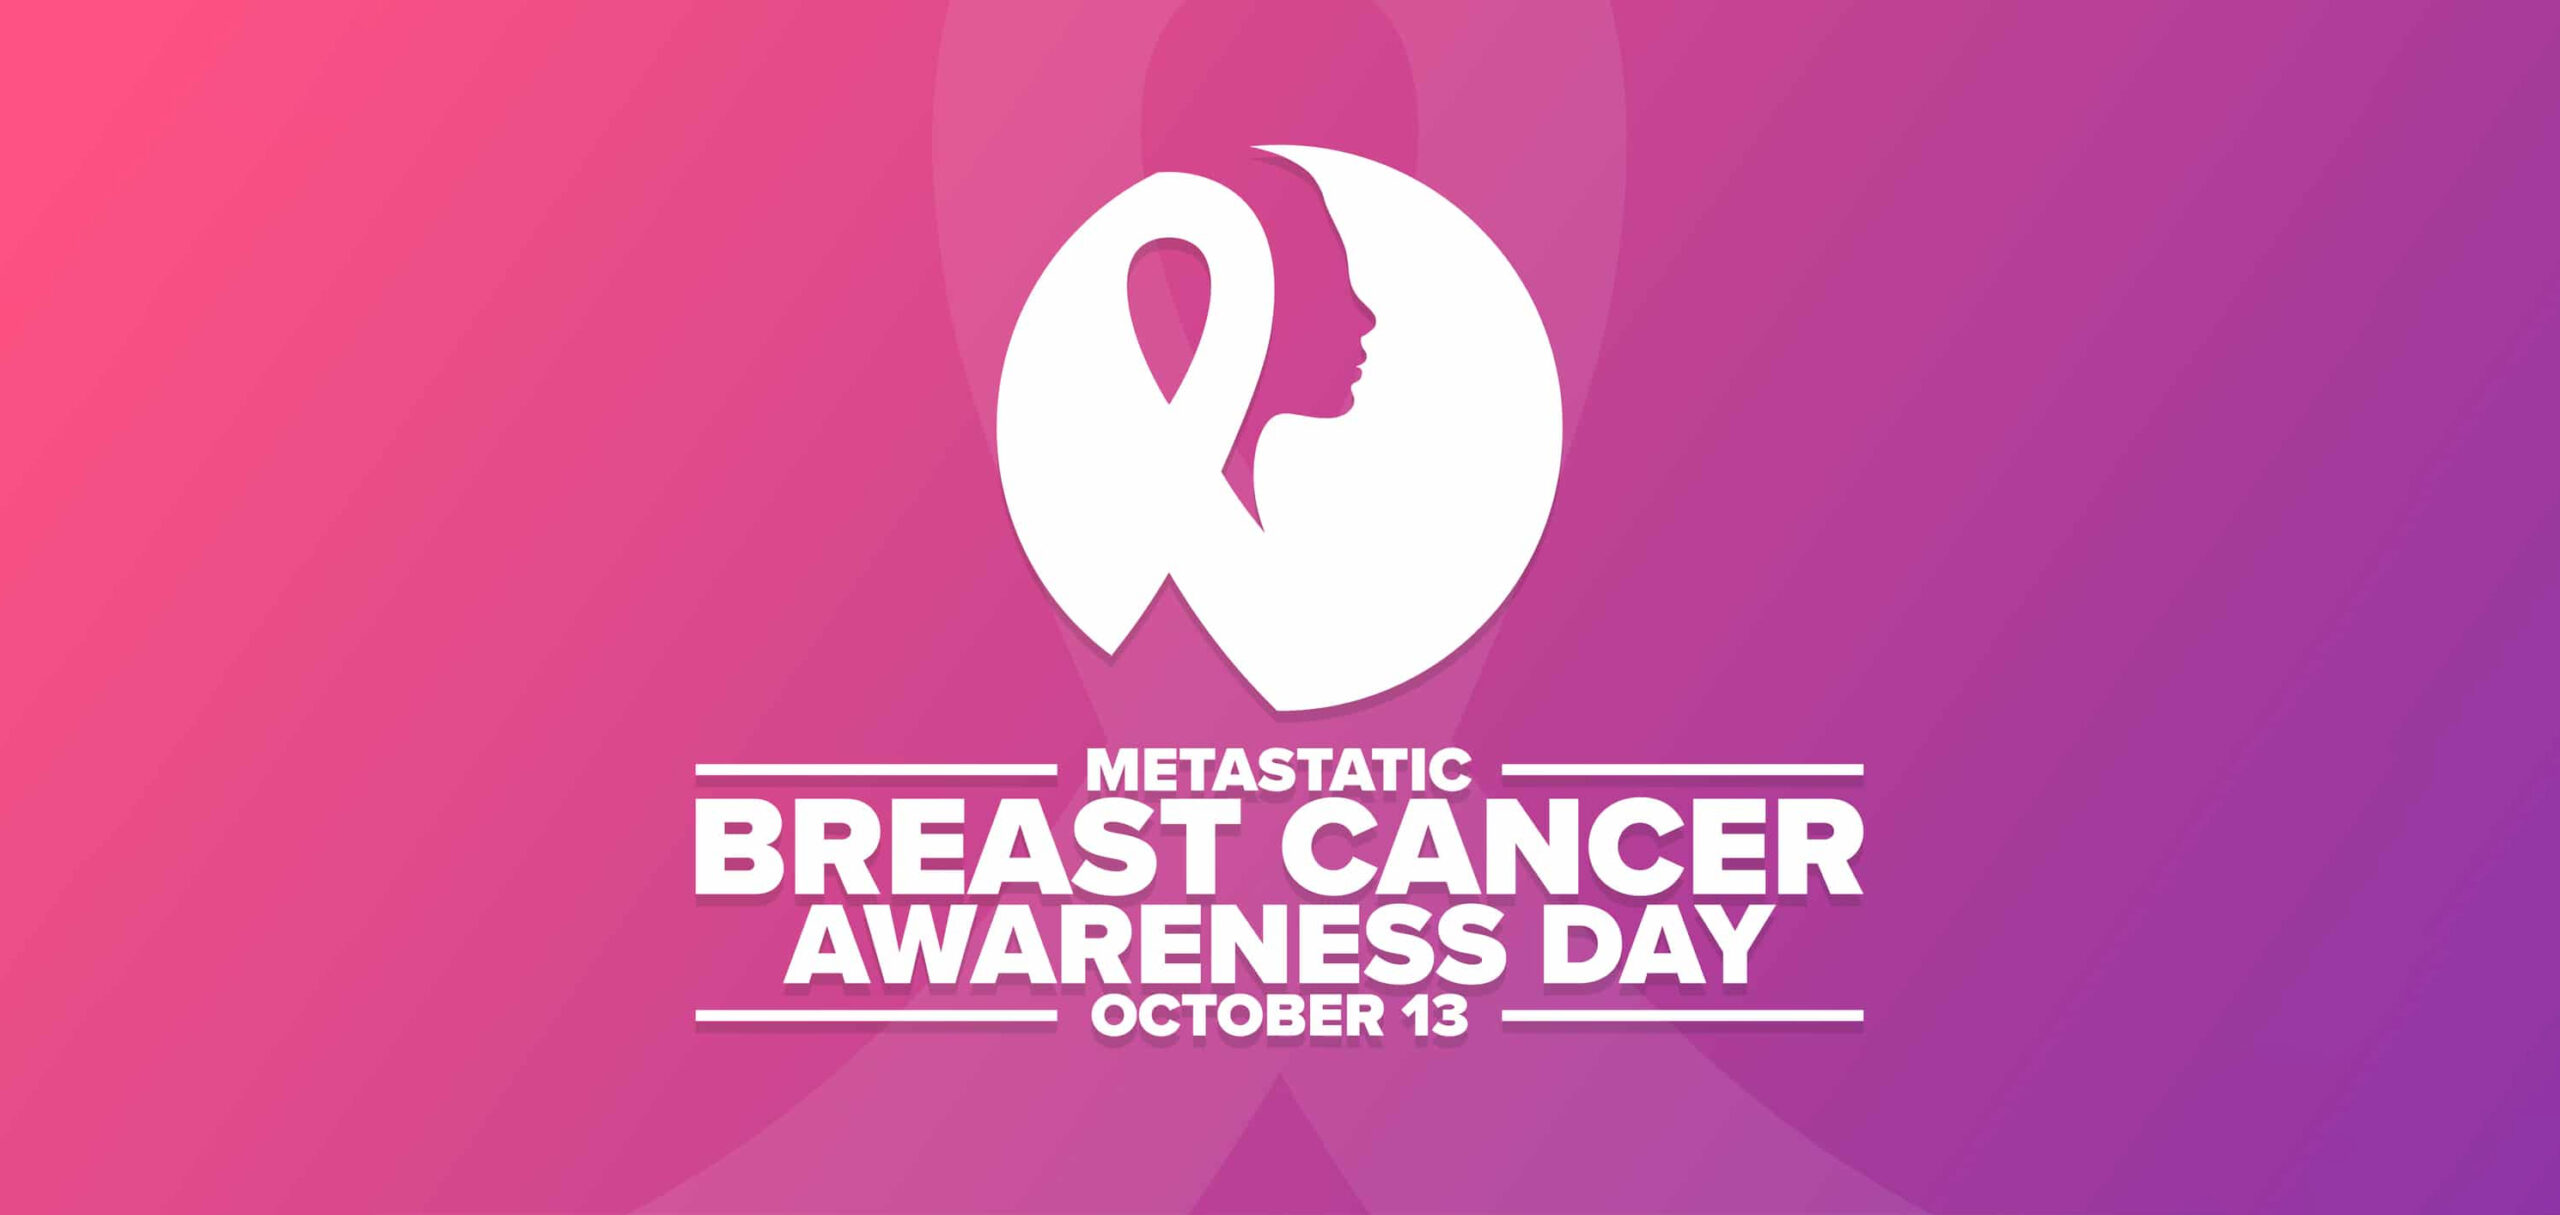 Metastatic Breast Cancer Awareness Day October 13